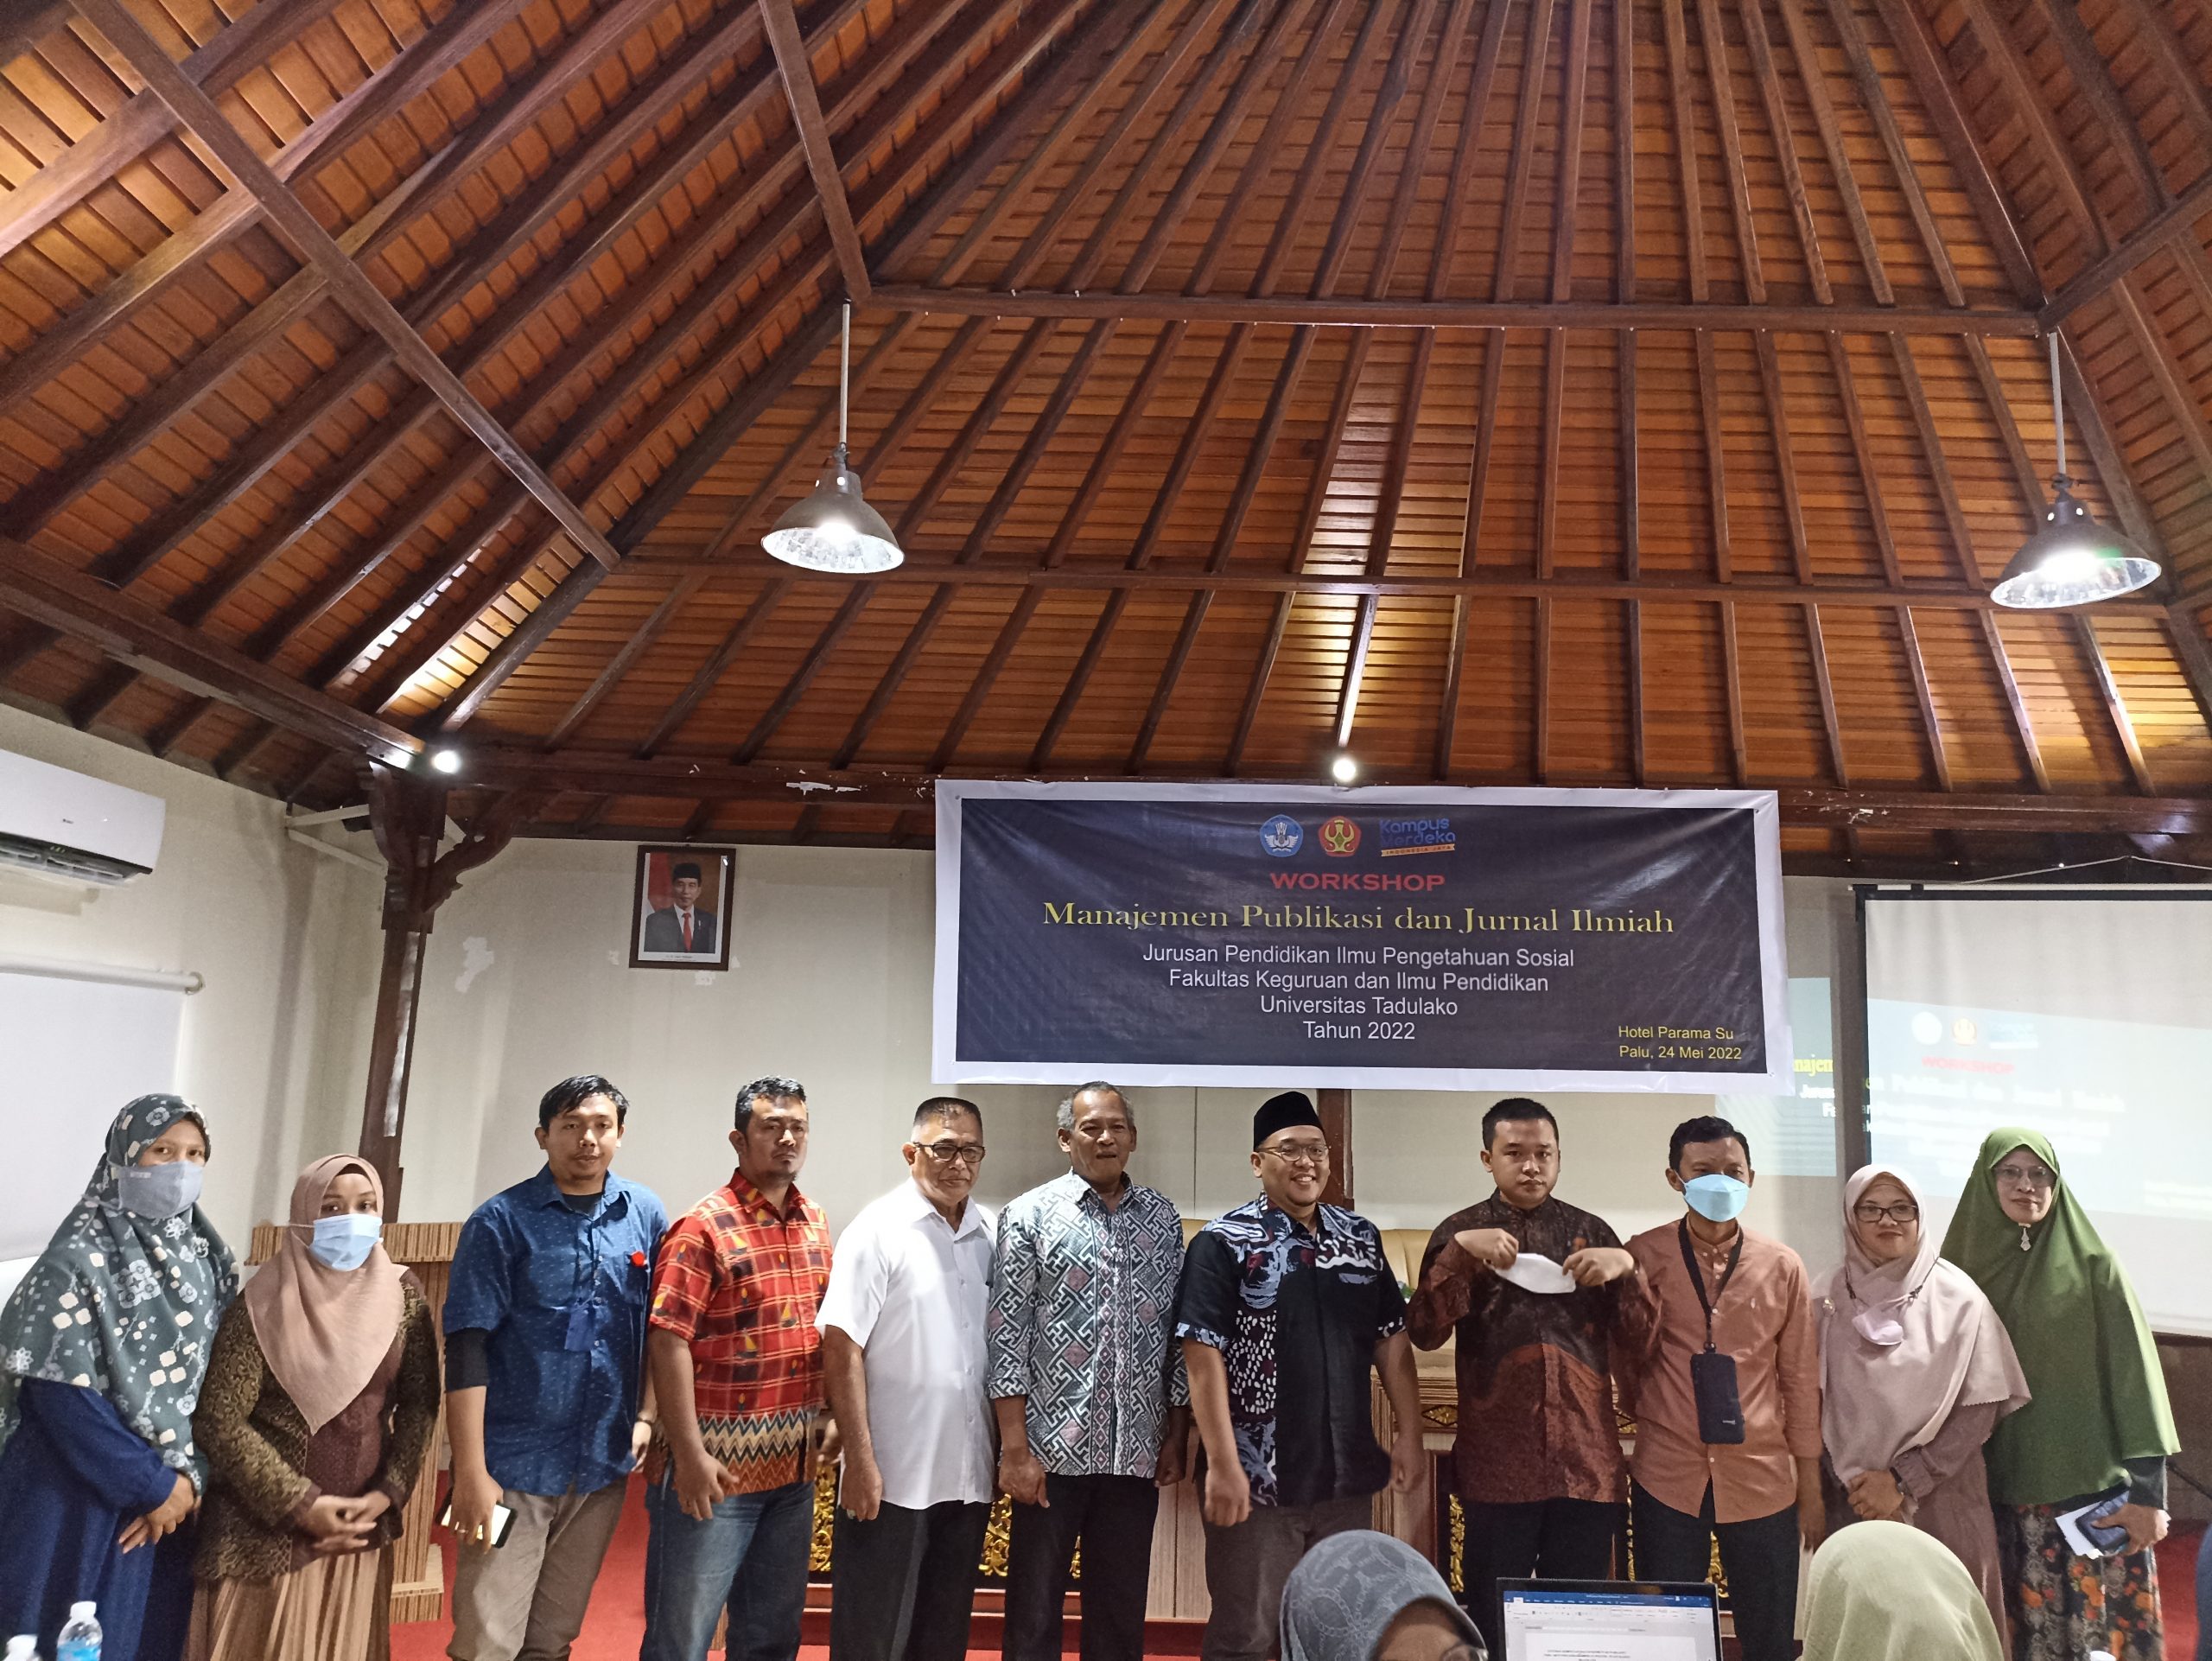 Workshop Manajmen Publikasi dan Jurnal Ilmiah Jurusan Pendidikan IPS